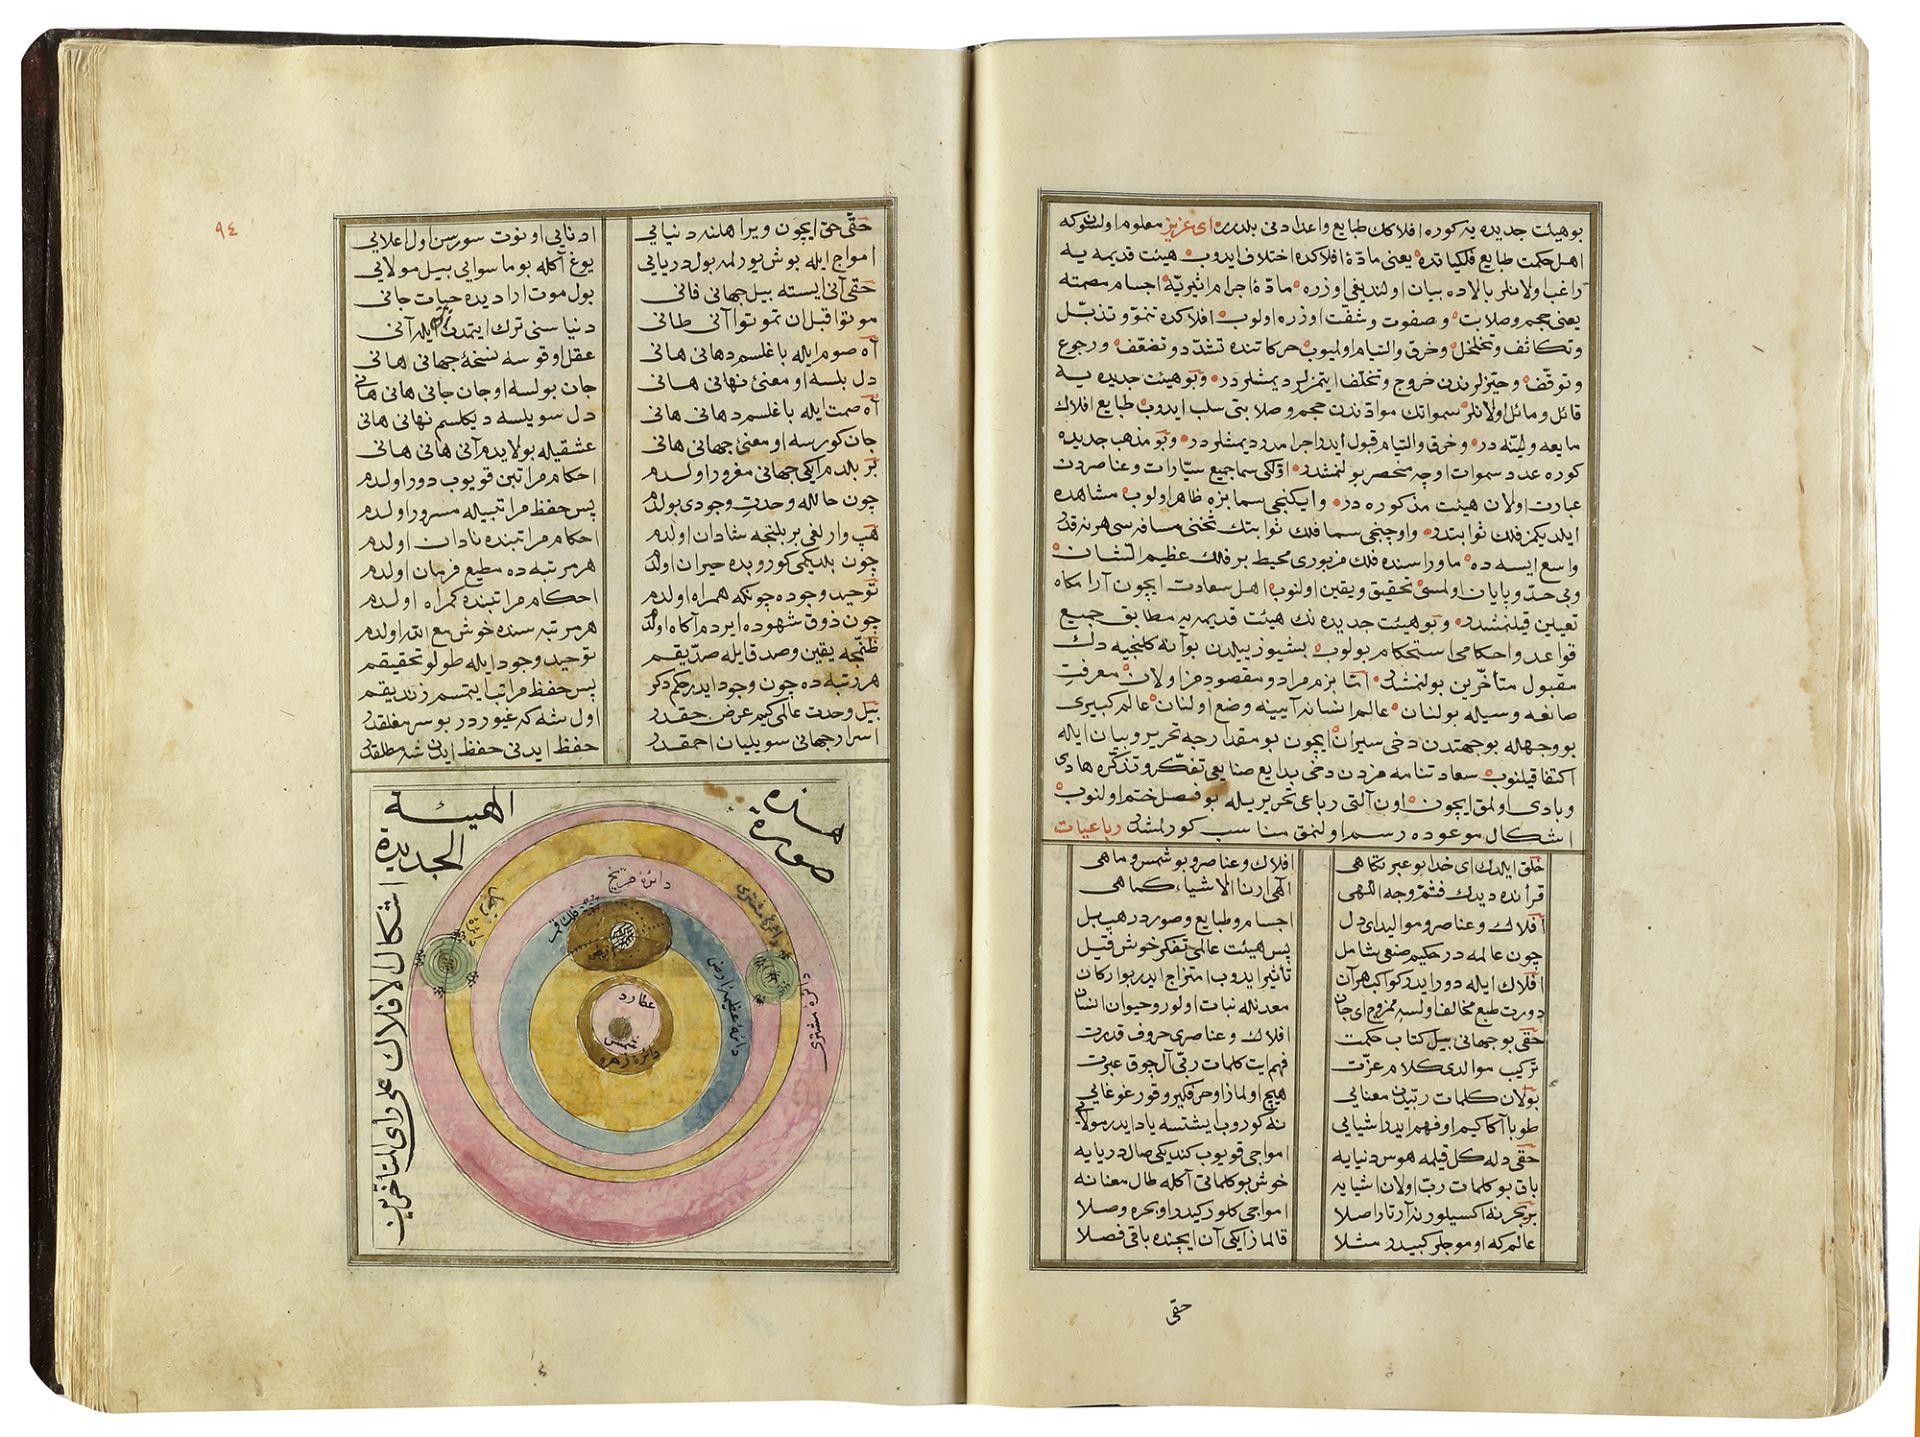 MARIFETNAME, IBRAHIM HAKKI, COPIED BY SAE'D ALLAH BIN ALI BIN AHMED, TURKEY, 1221 AH/1806 AD - Image 44 of 58